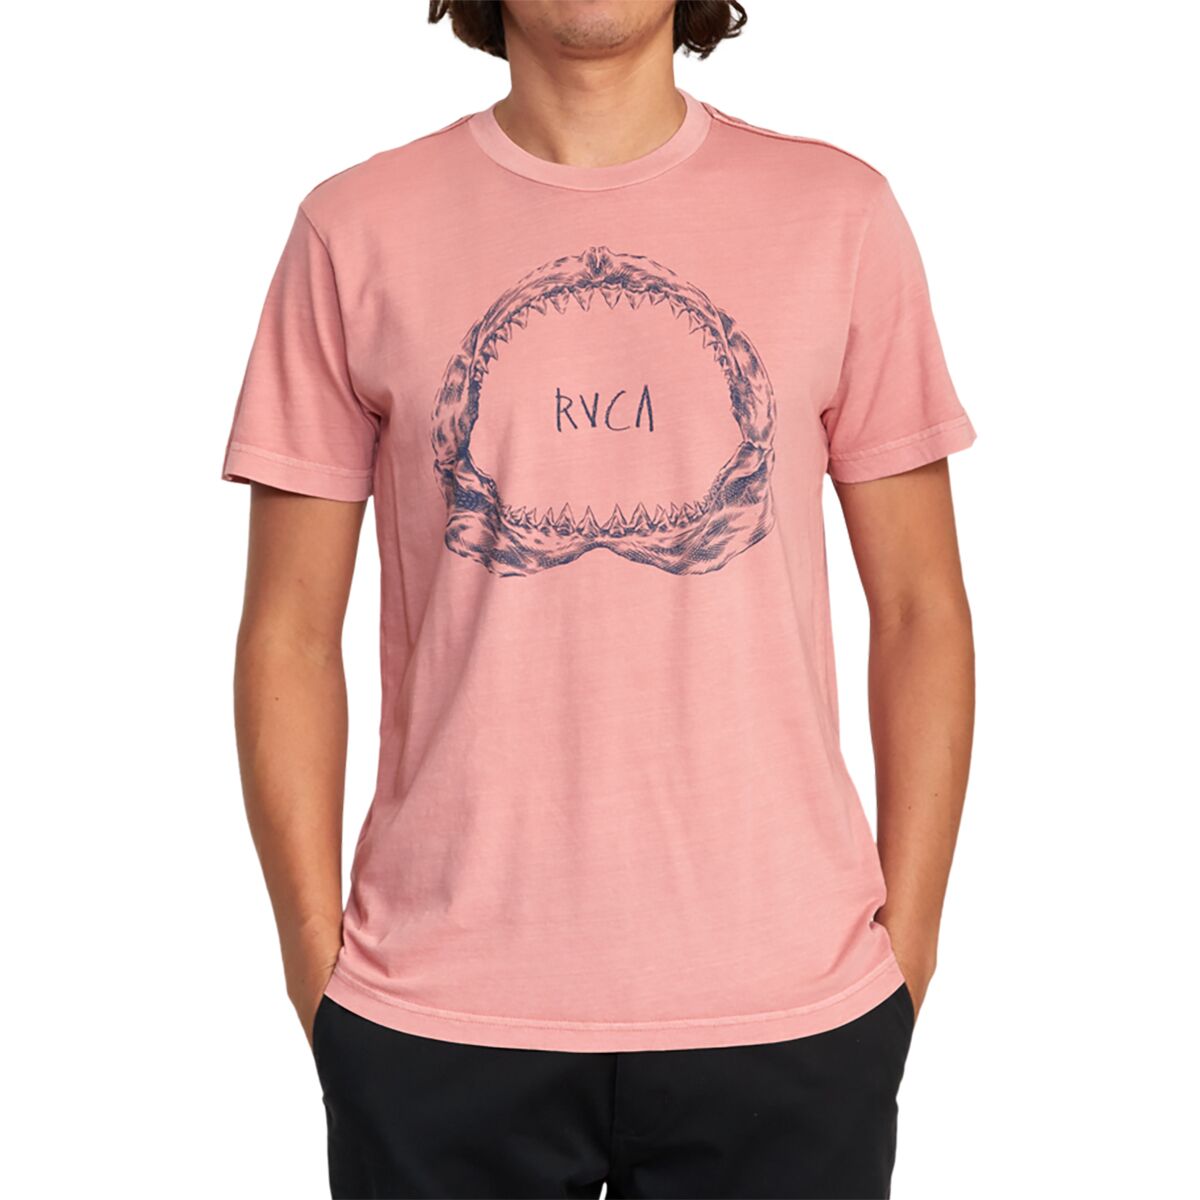 RVCA Horton Teeth Short-Sleeve T-Shirt - Men's